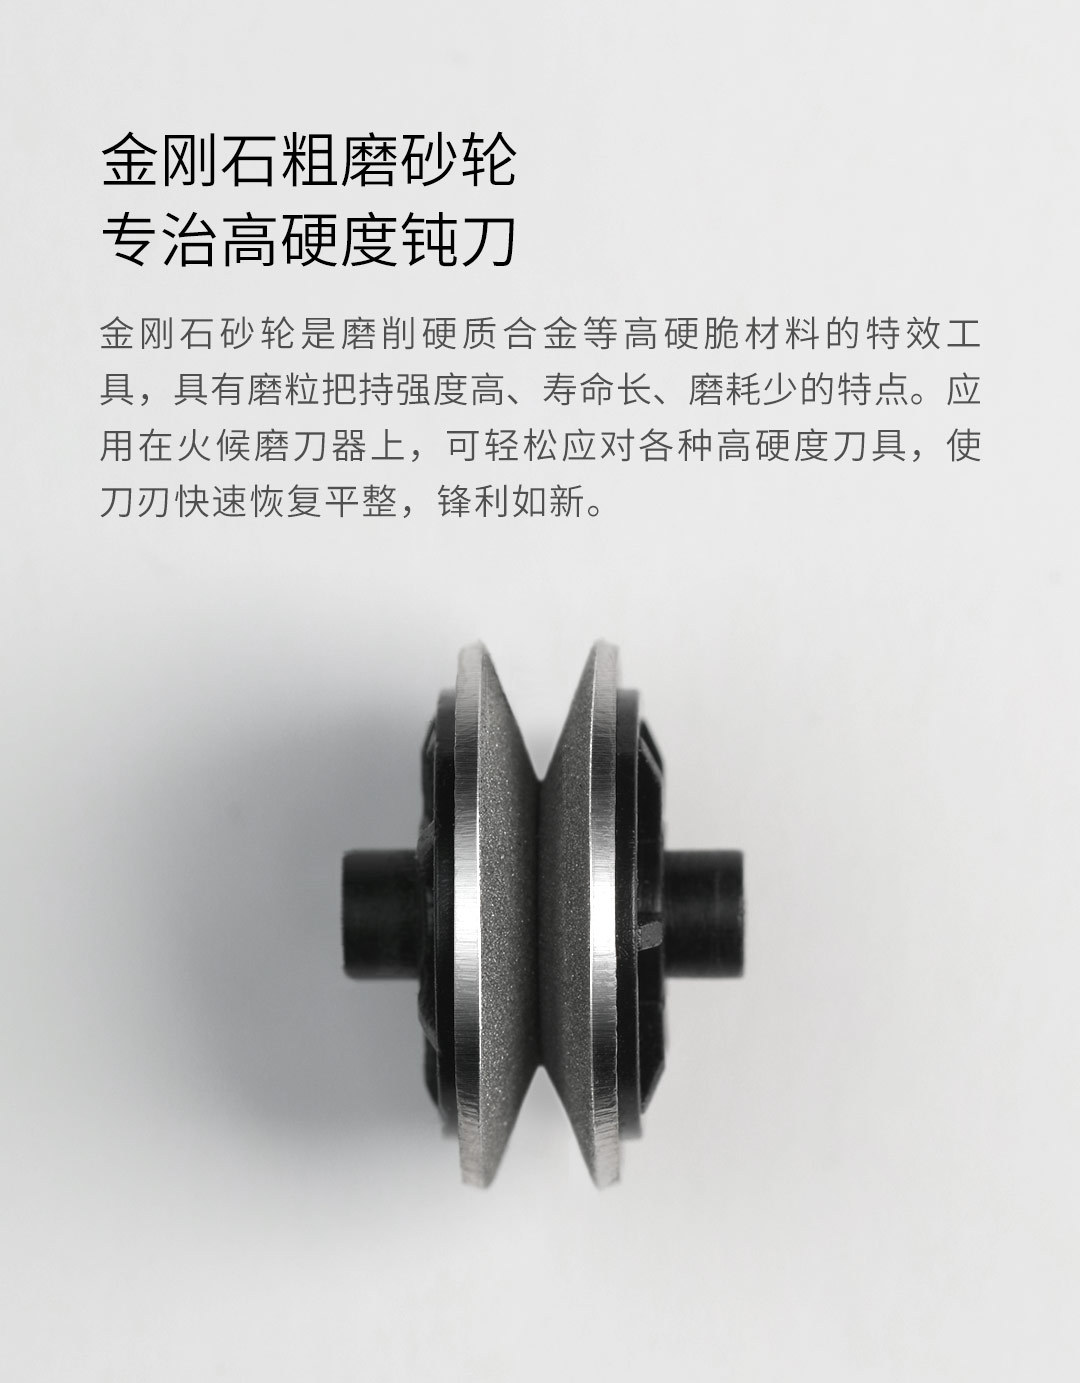 product_奇妙_火候磨刀器